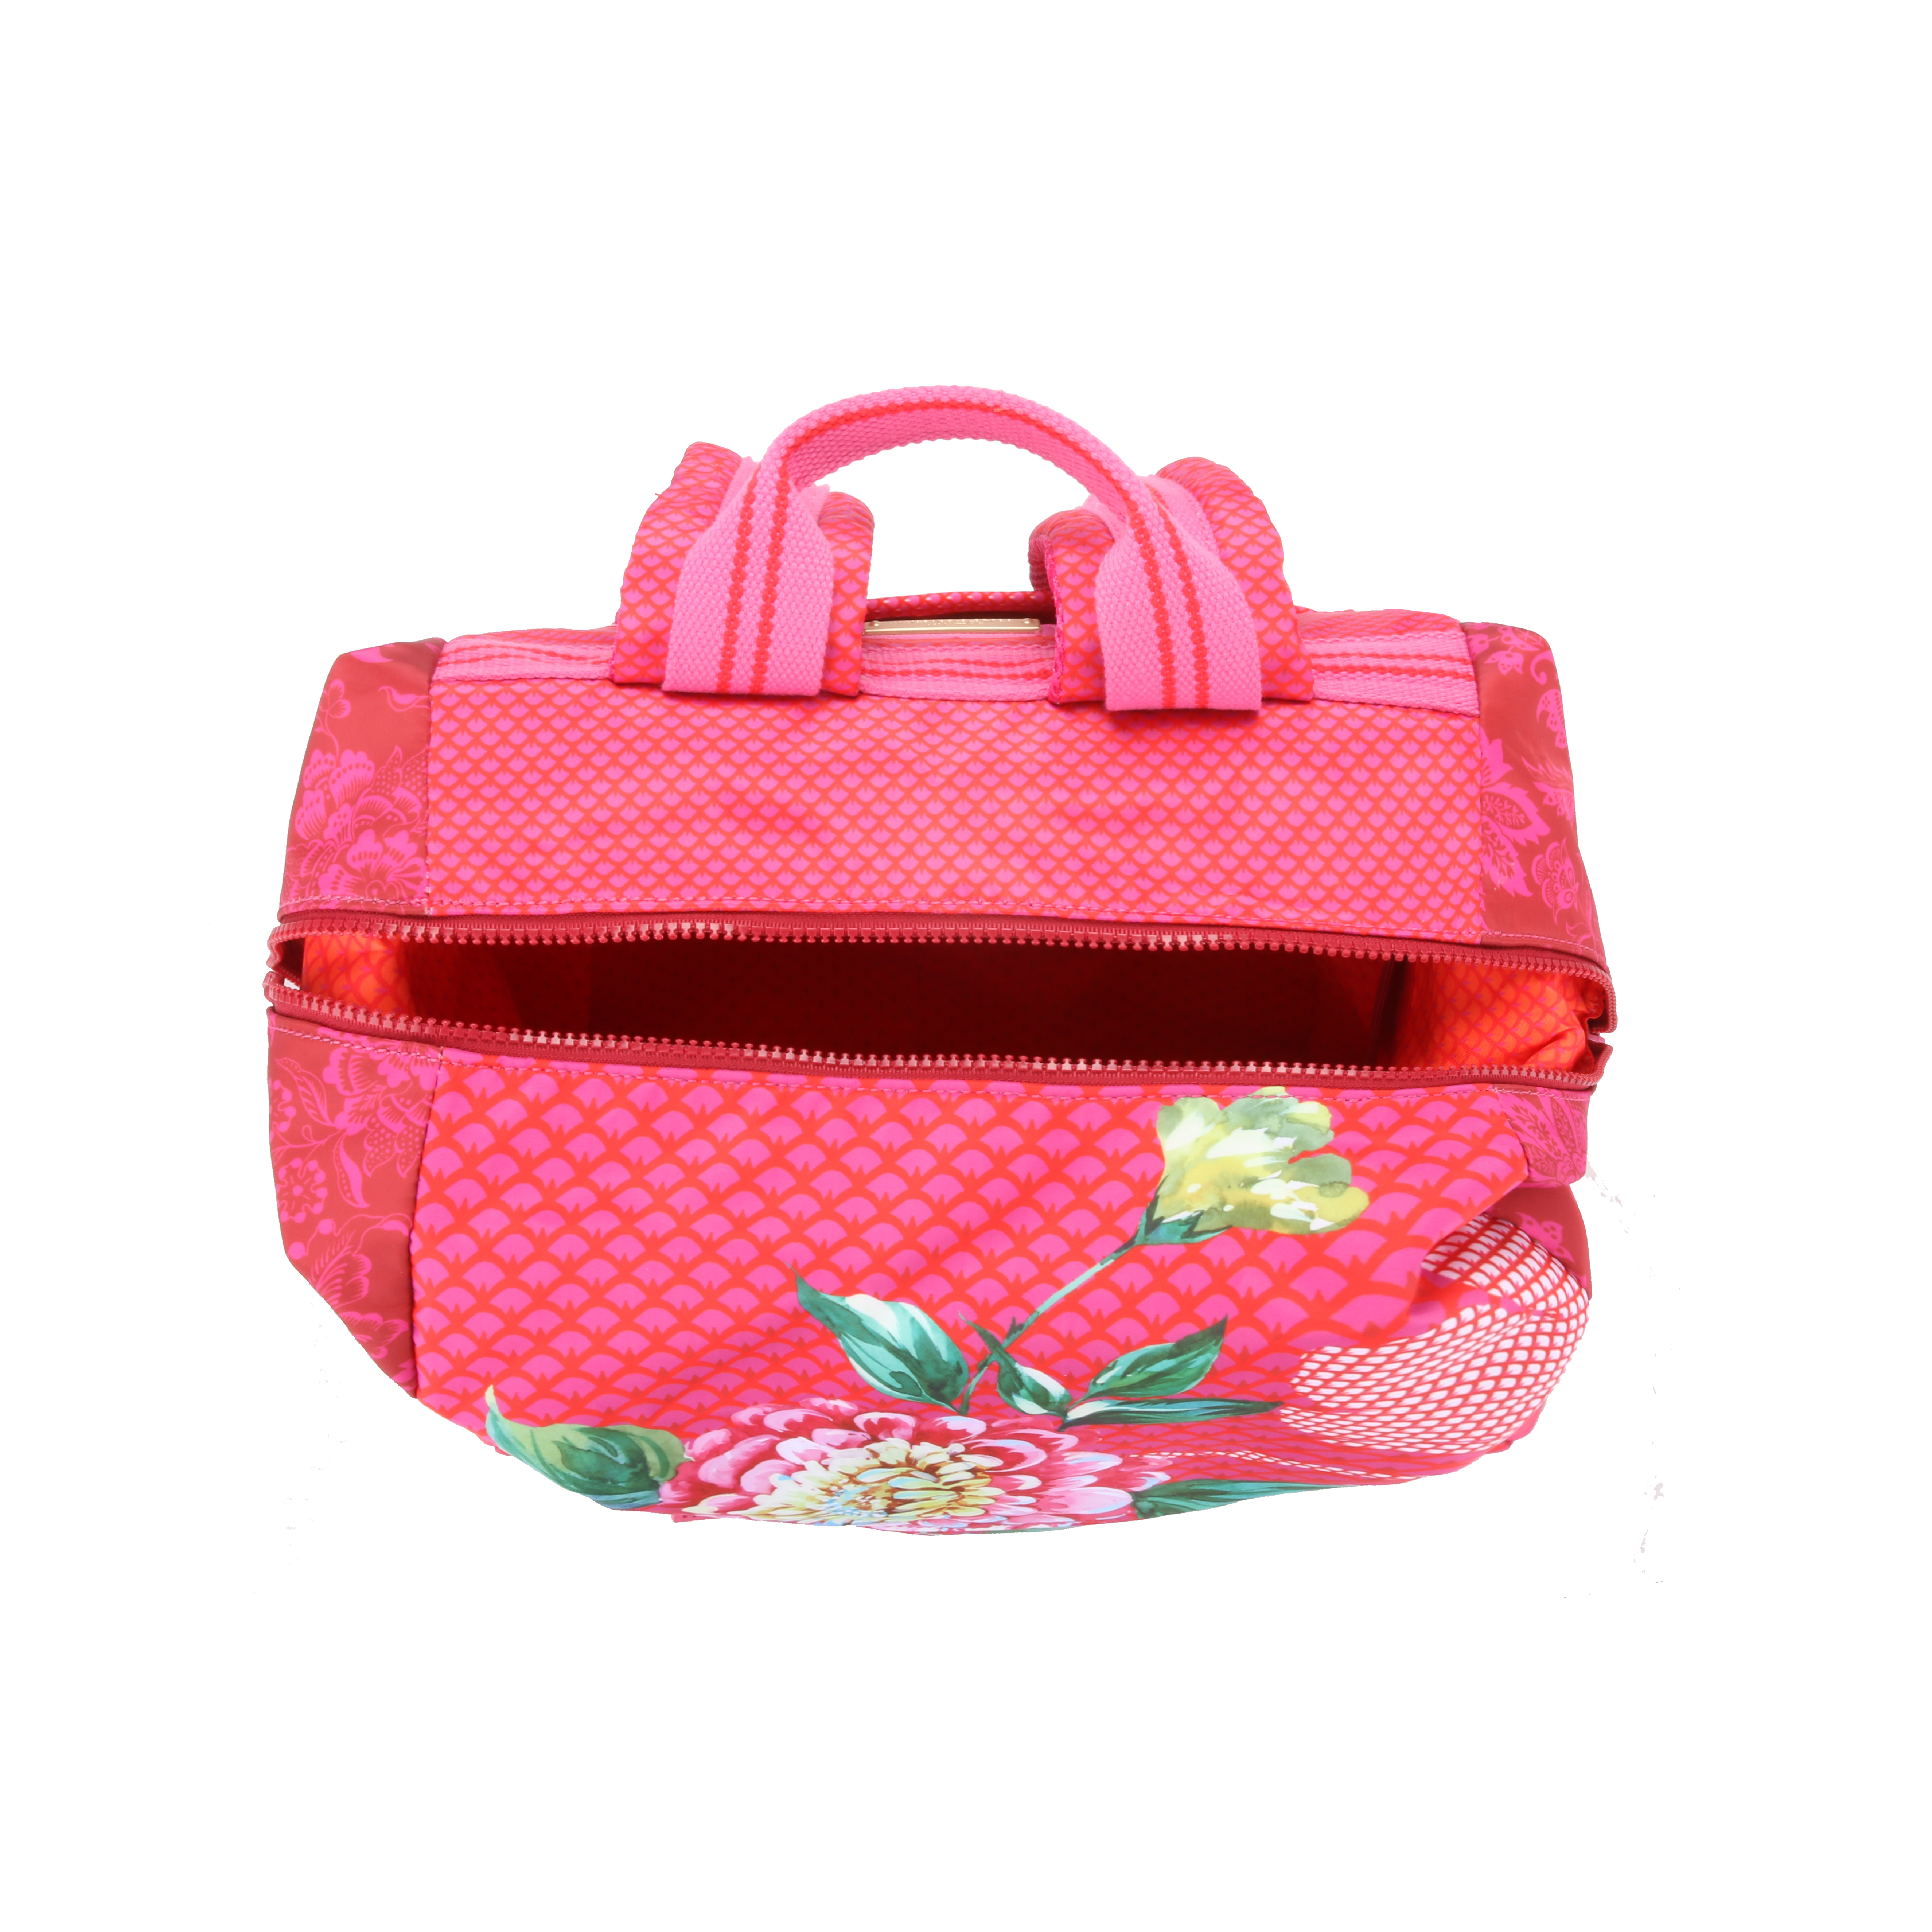 Backpack Dahlia Pink